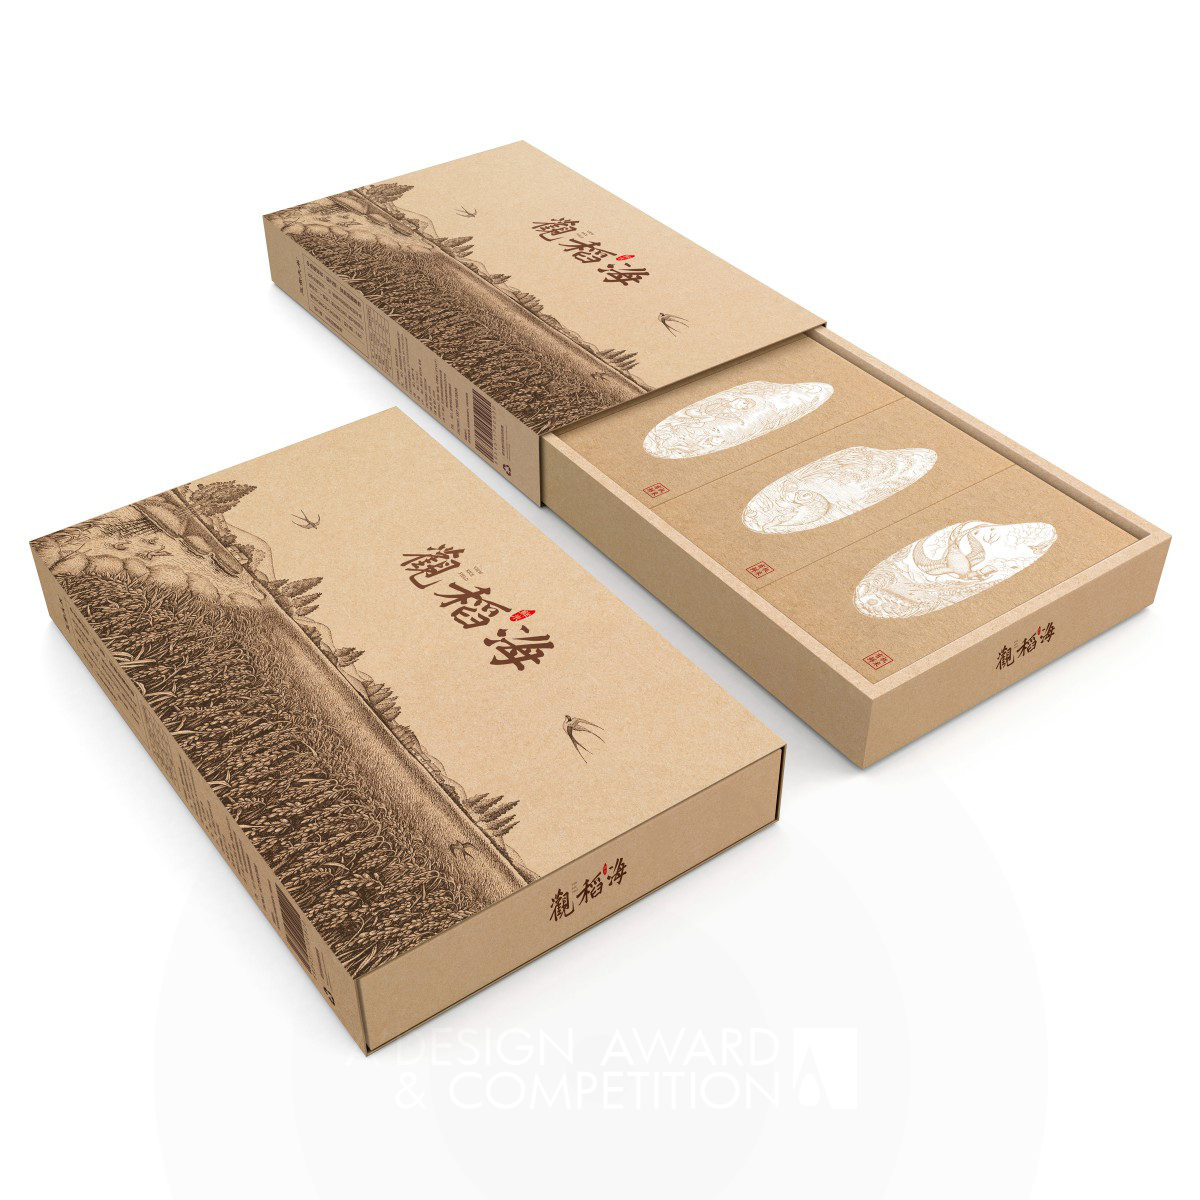 Organic Fresh Rice Package by Yong Huang Bronze Packaging Design Award Winner 2019 